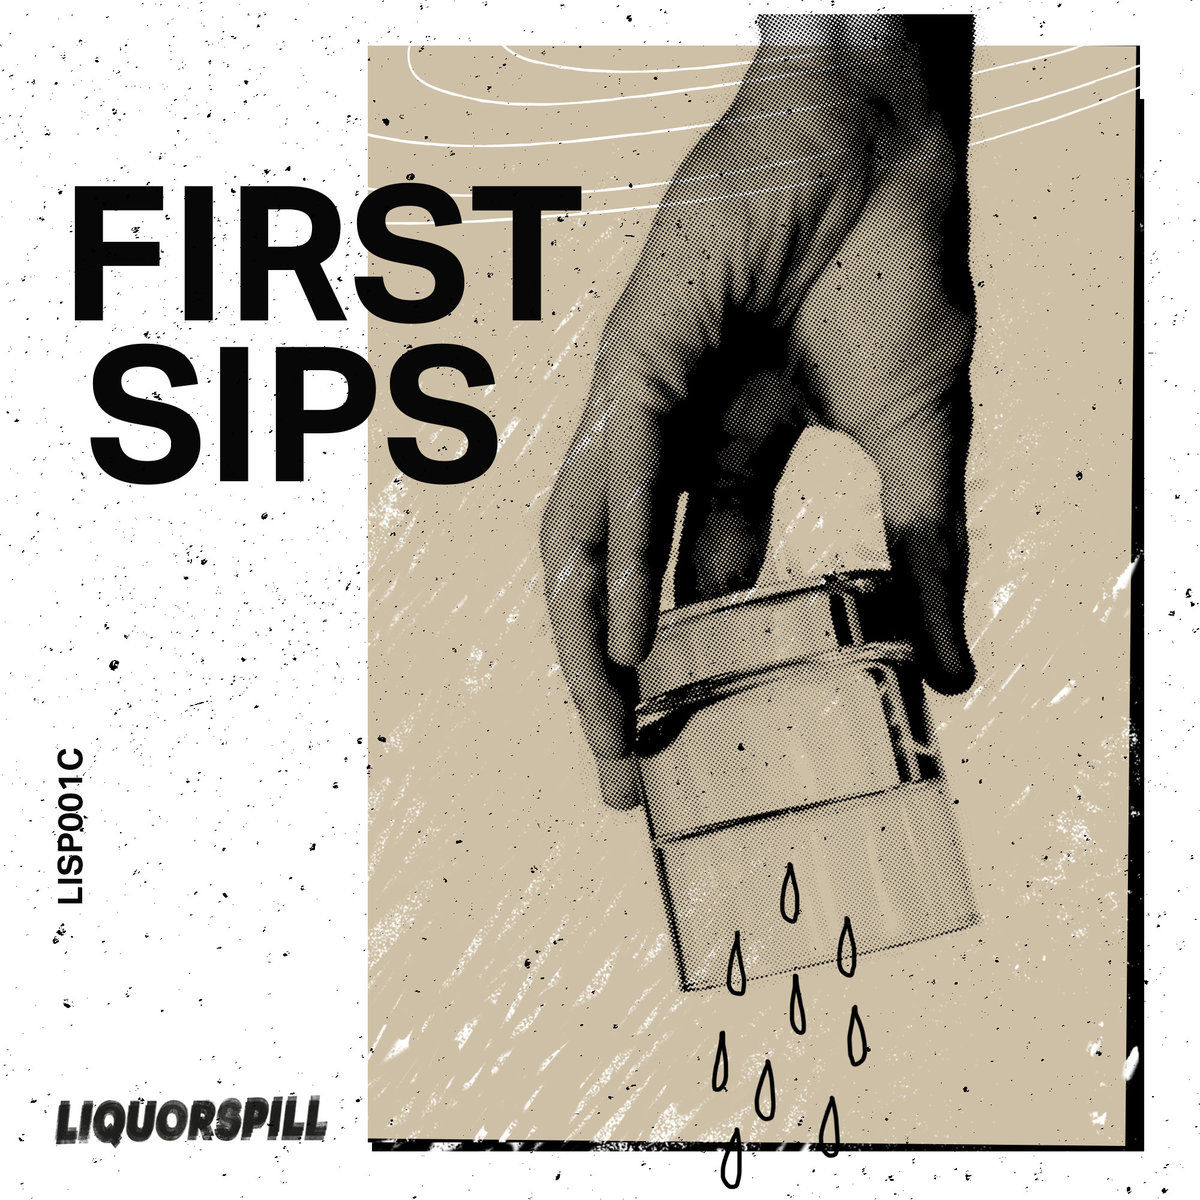 First Sips - V. A. - Liquor Spill - LISP001C